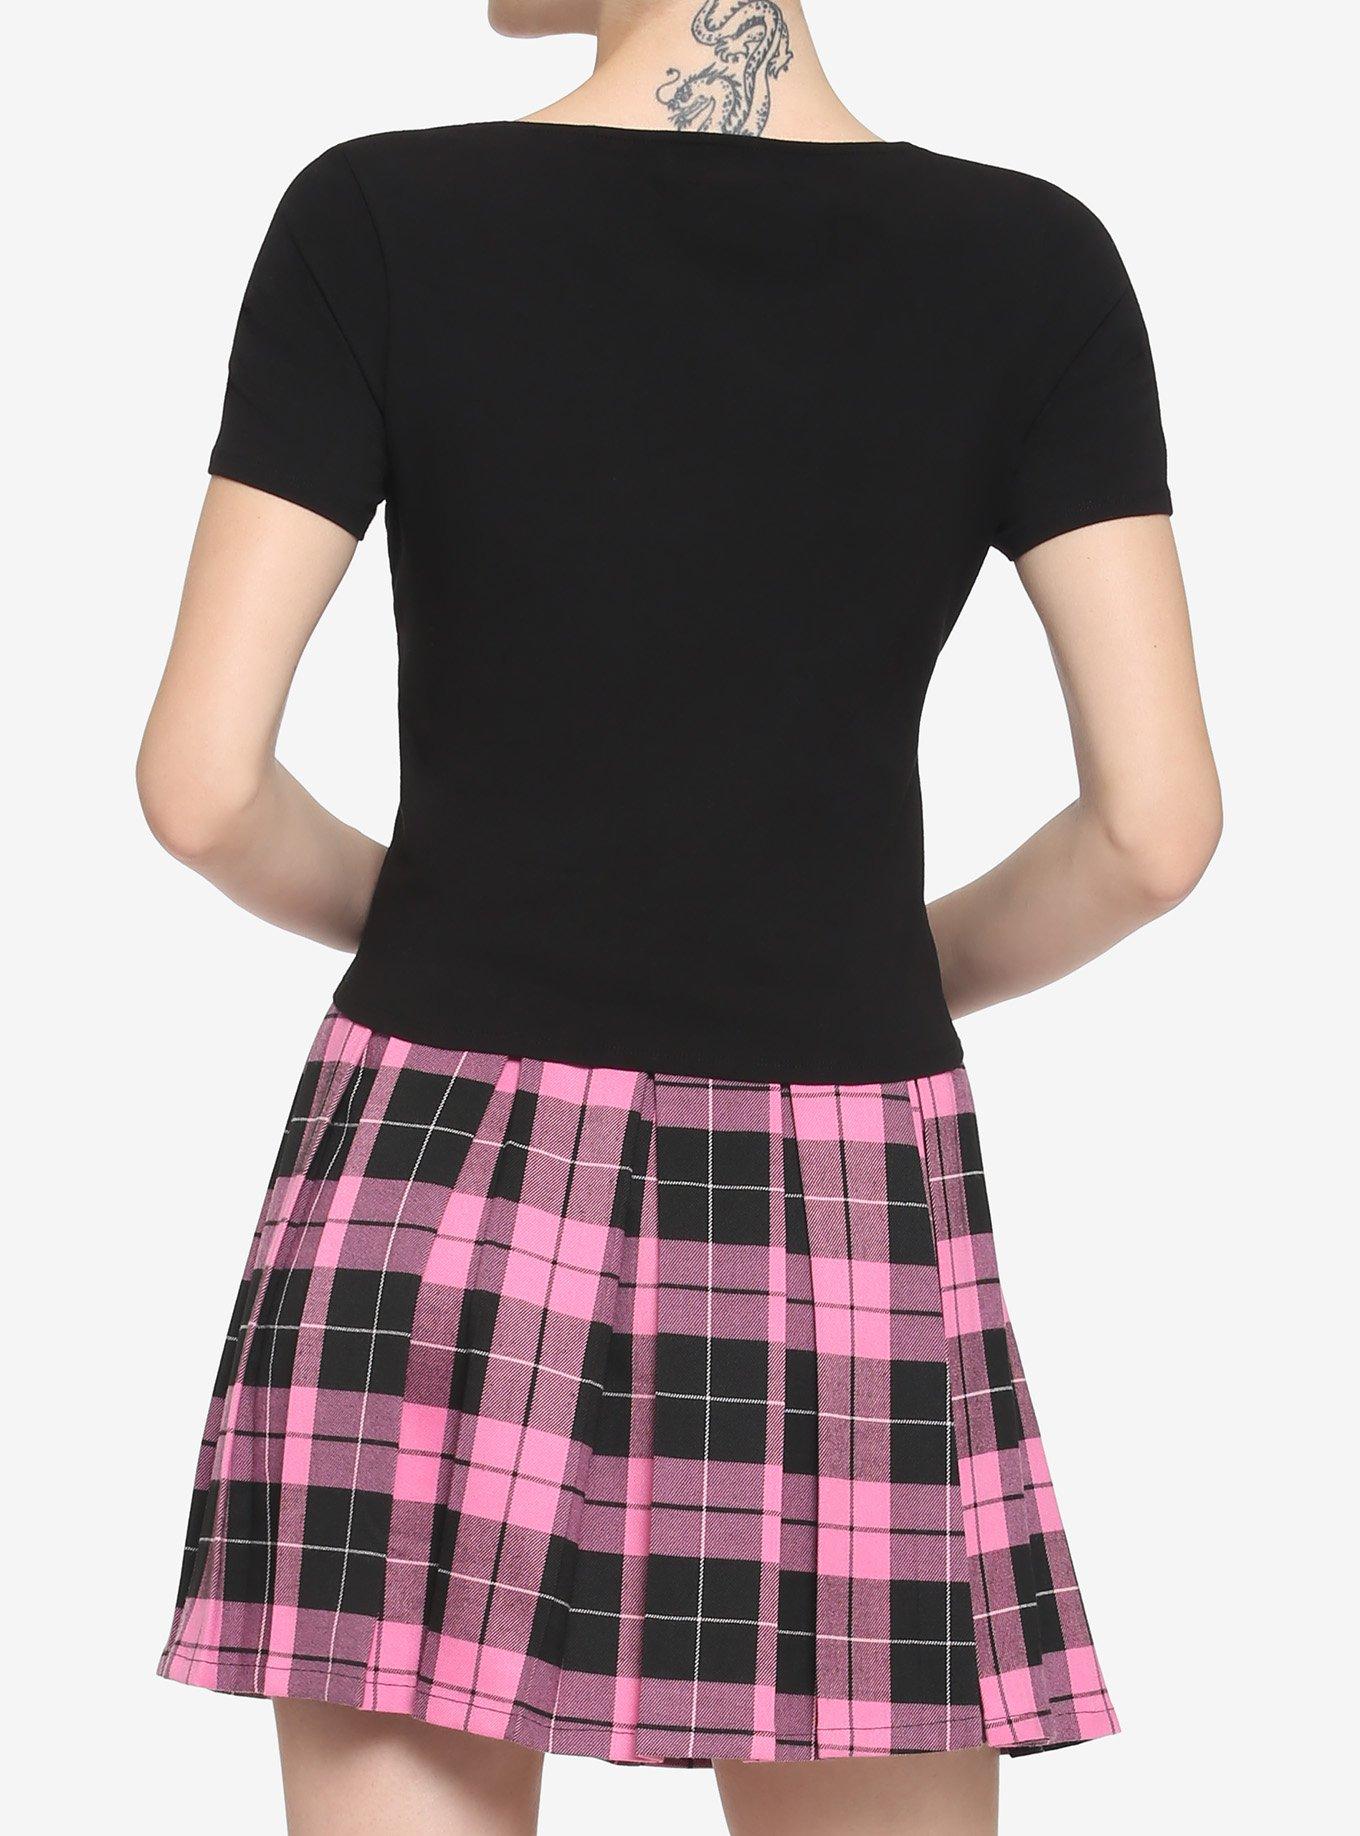 Black Lace-Up Cutout Girls Crop T-Shirt, BLACK, alternate